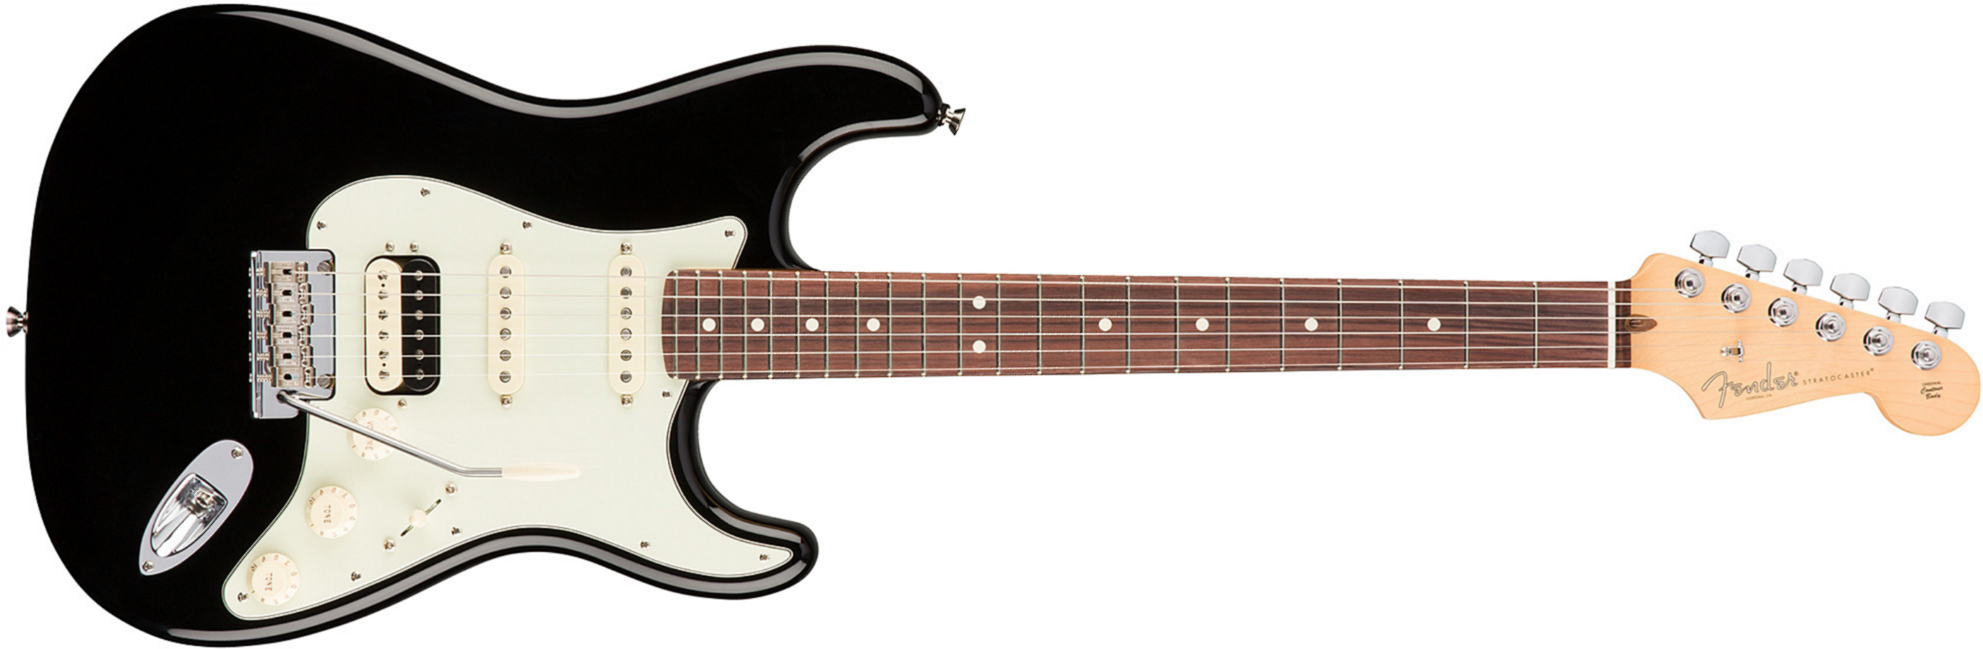 Fender Strat Hss Shawbucker American Professional Usa Rw - Black - Guitarra electrica de 12 cuerdas - Main picture